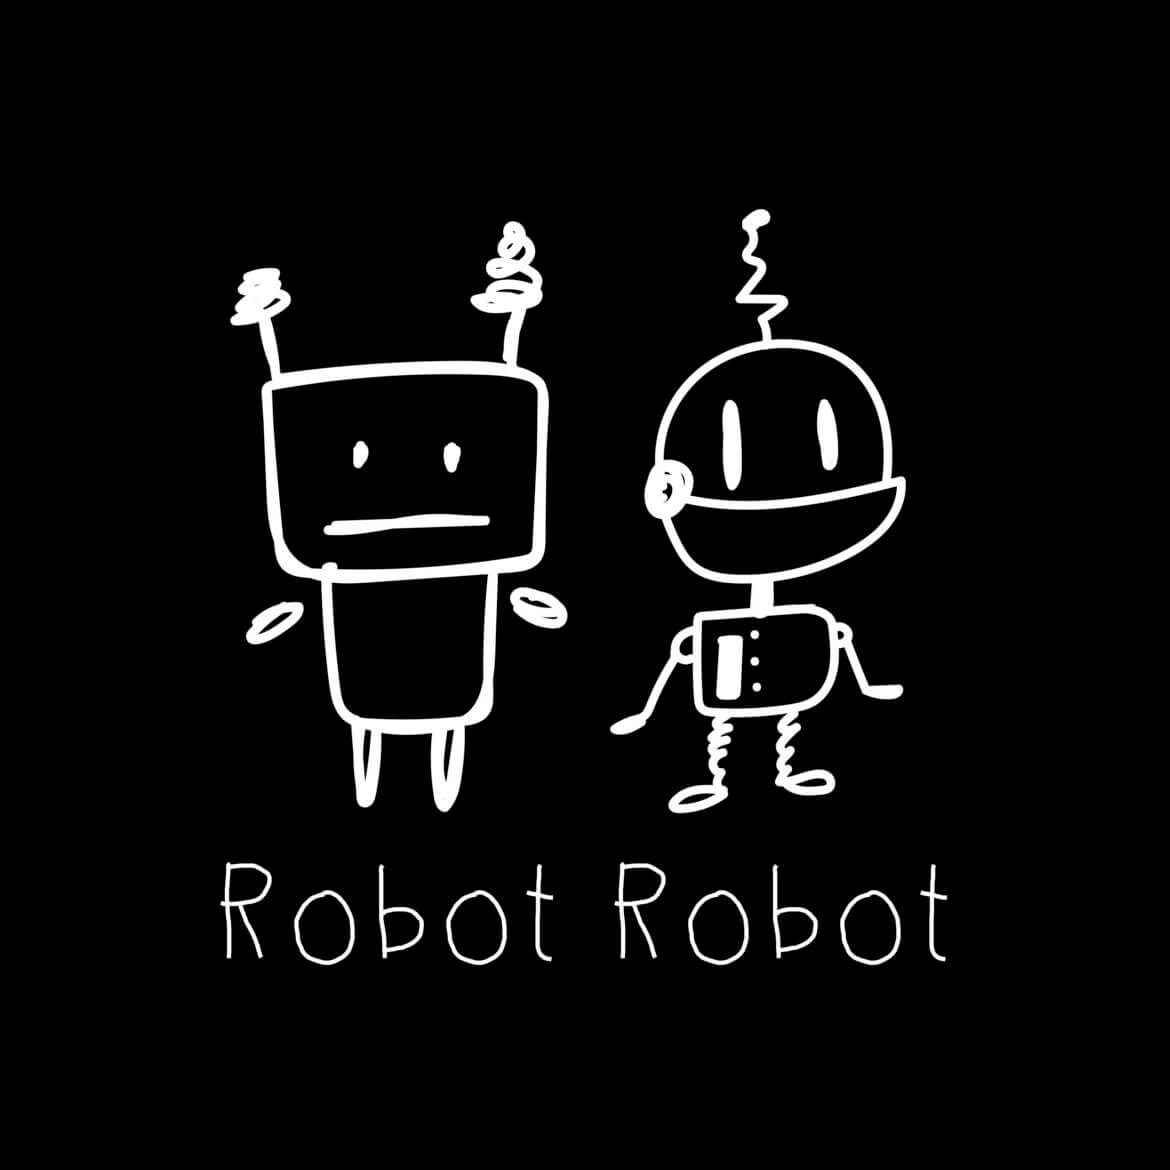 robot robot radio show